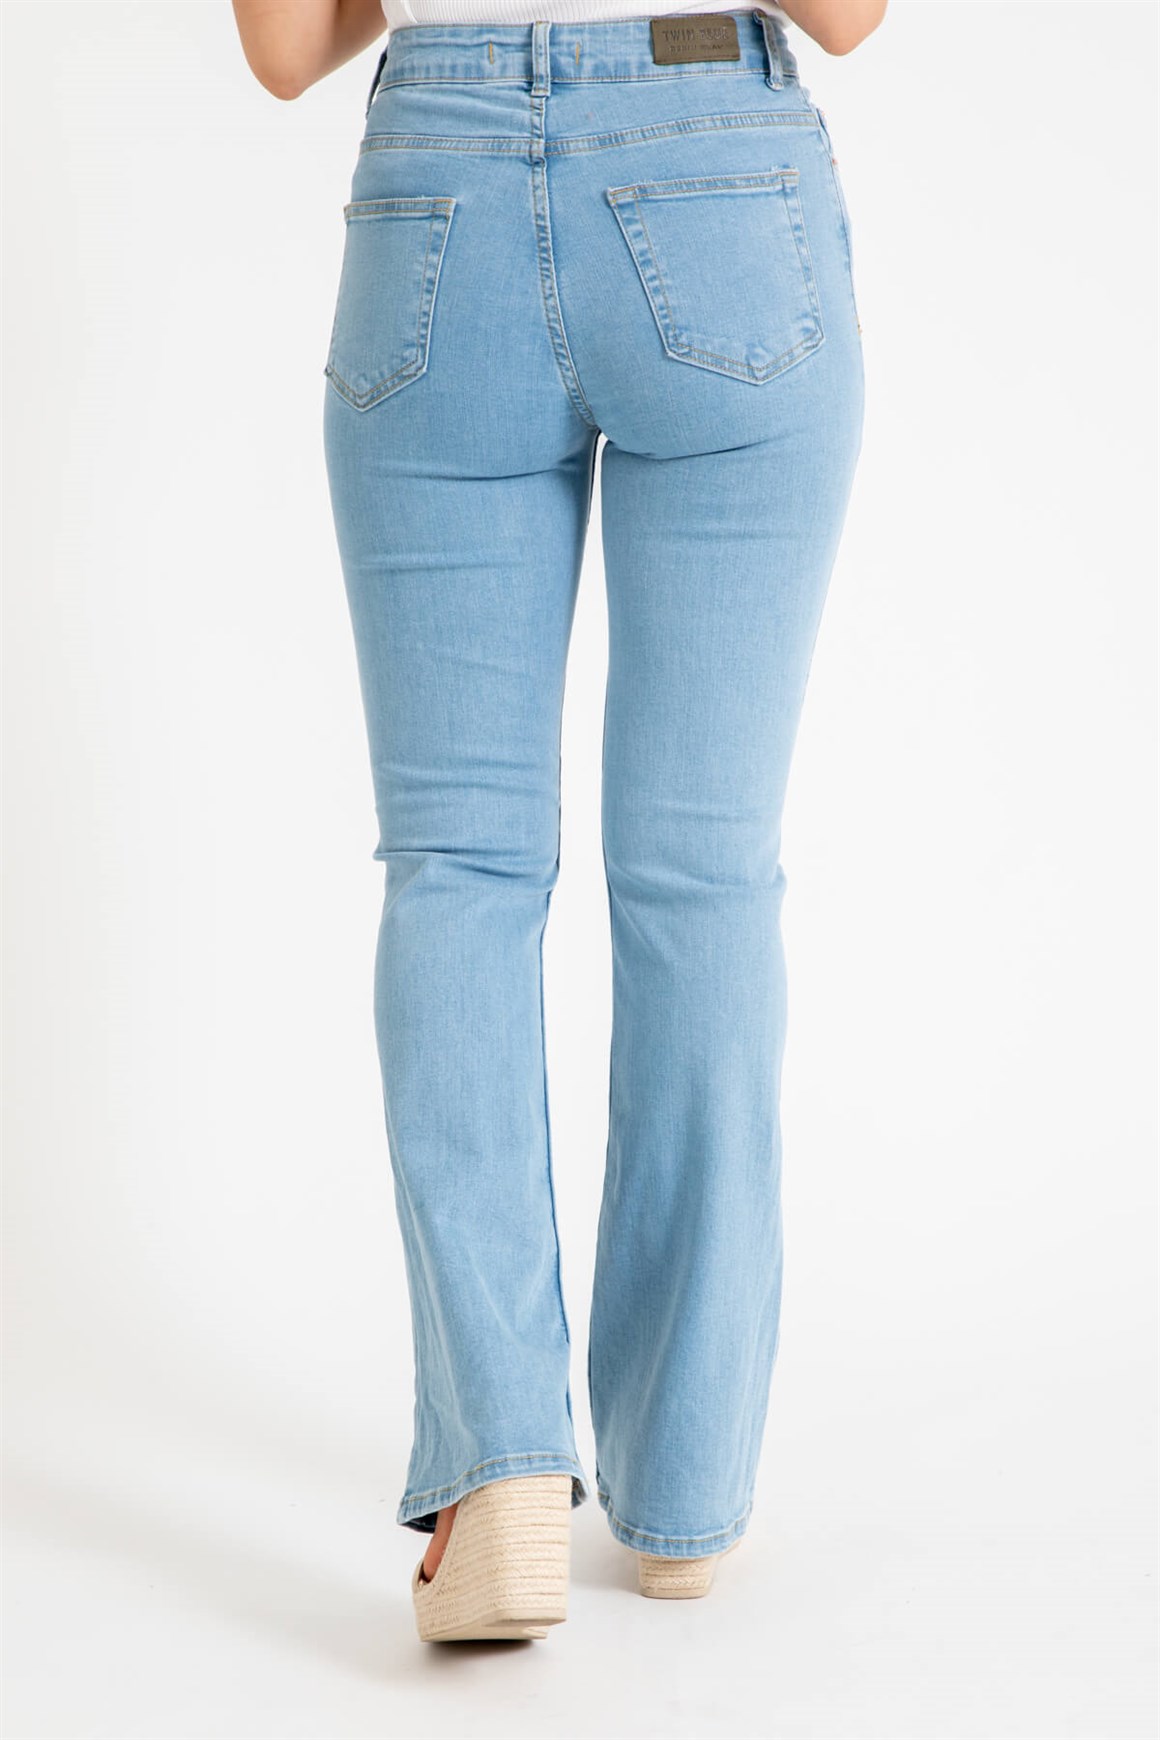 Spanish Cut Women's Jeans -